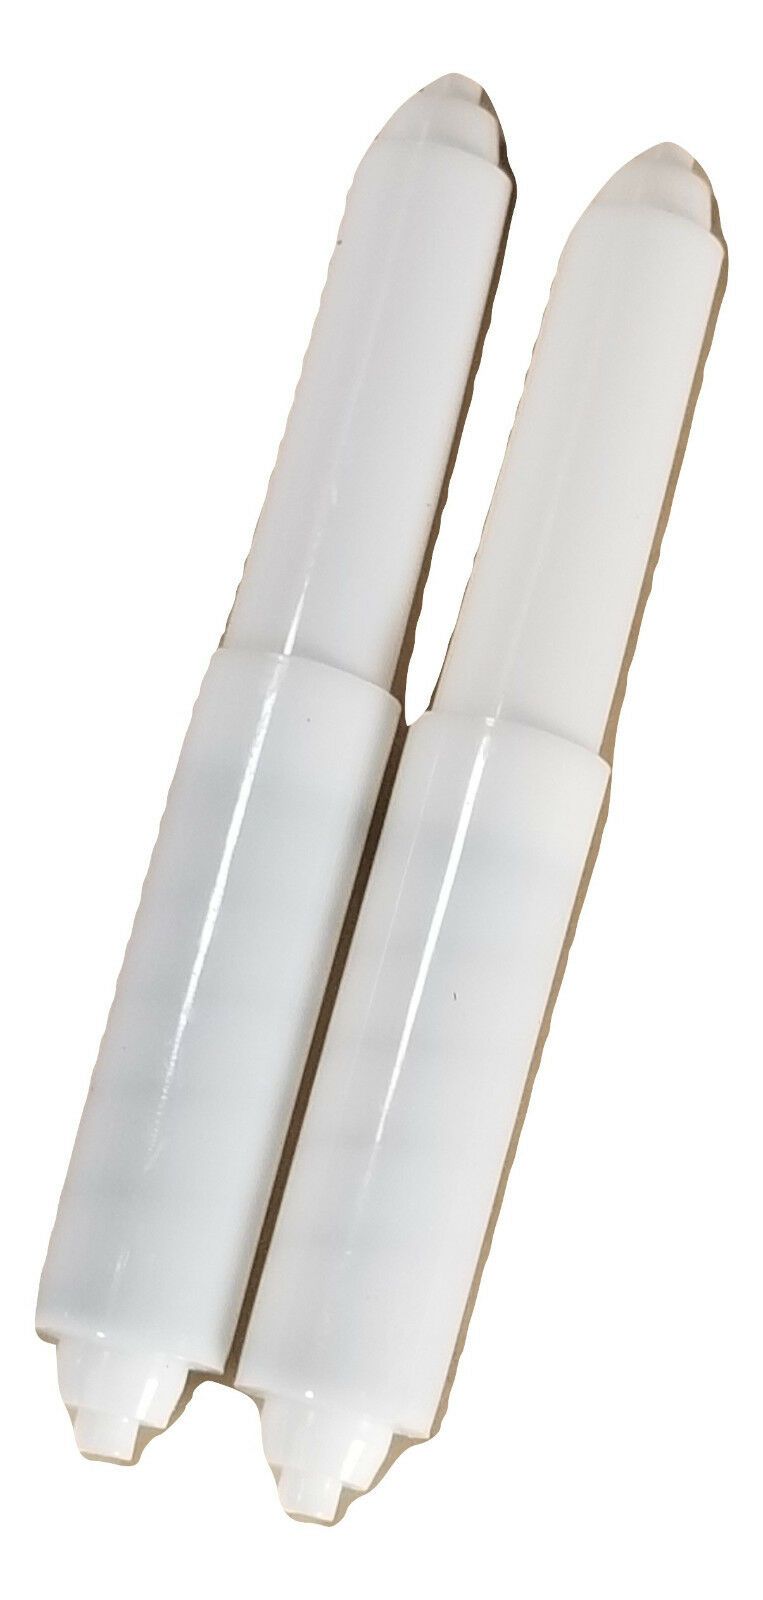 2 toilet paper rollers tissue holders white plastic Toilet Paper Holders-Mounted Carvers Olde Iron 